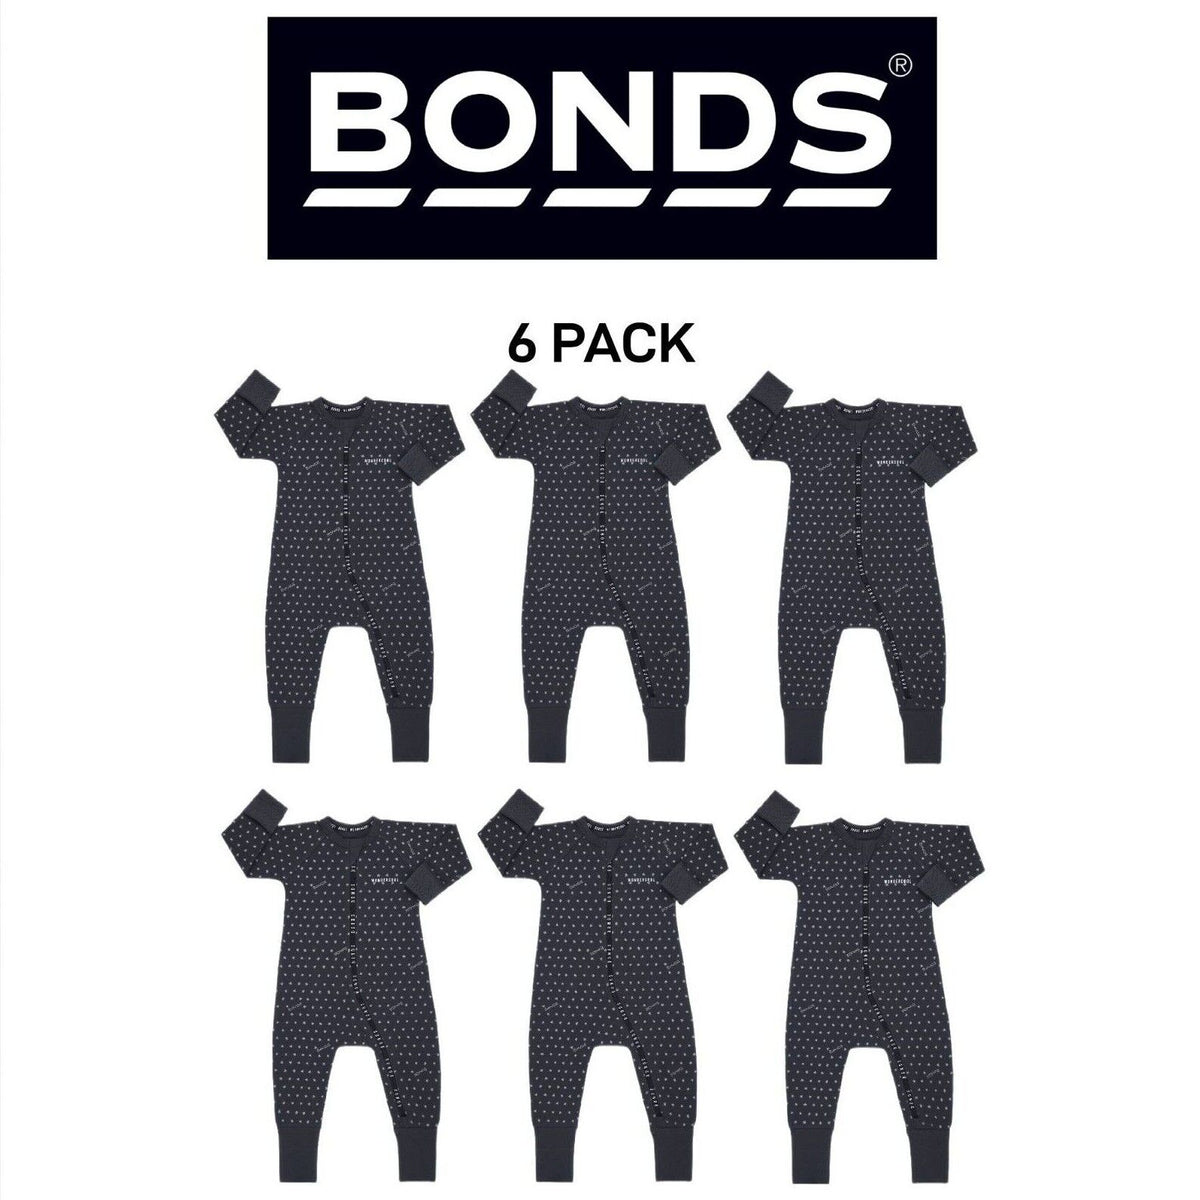 Bonds Baby Wondercool Zip Wondersuit Warmth Two-way Safety Zip 6 Pack BX49A